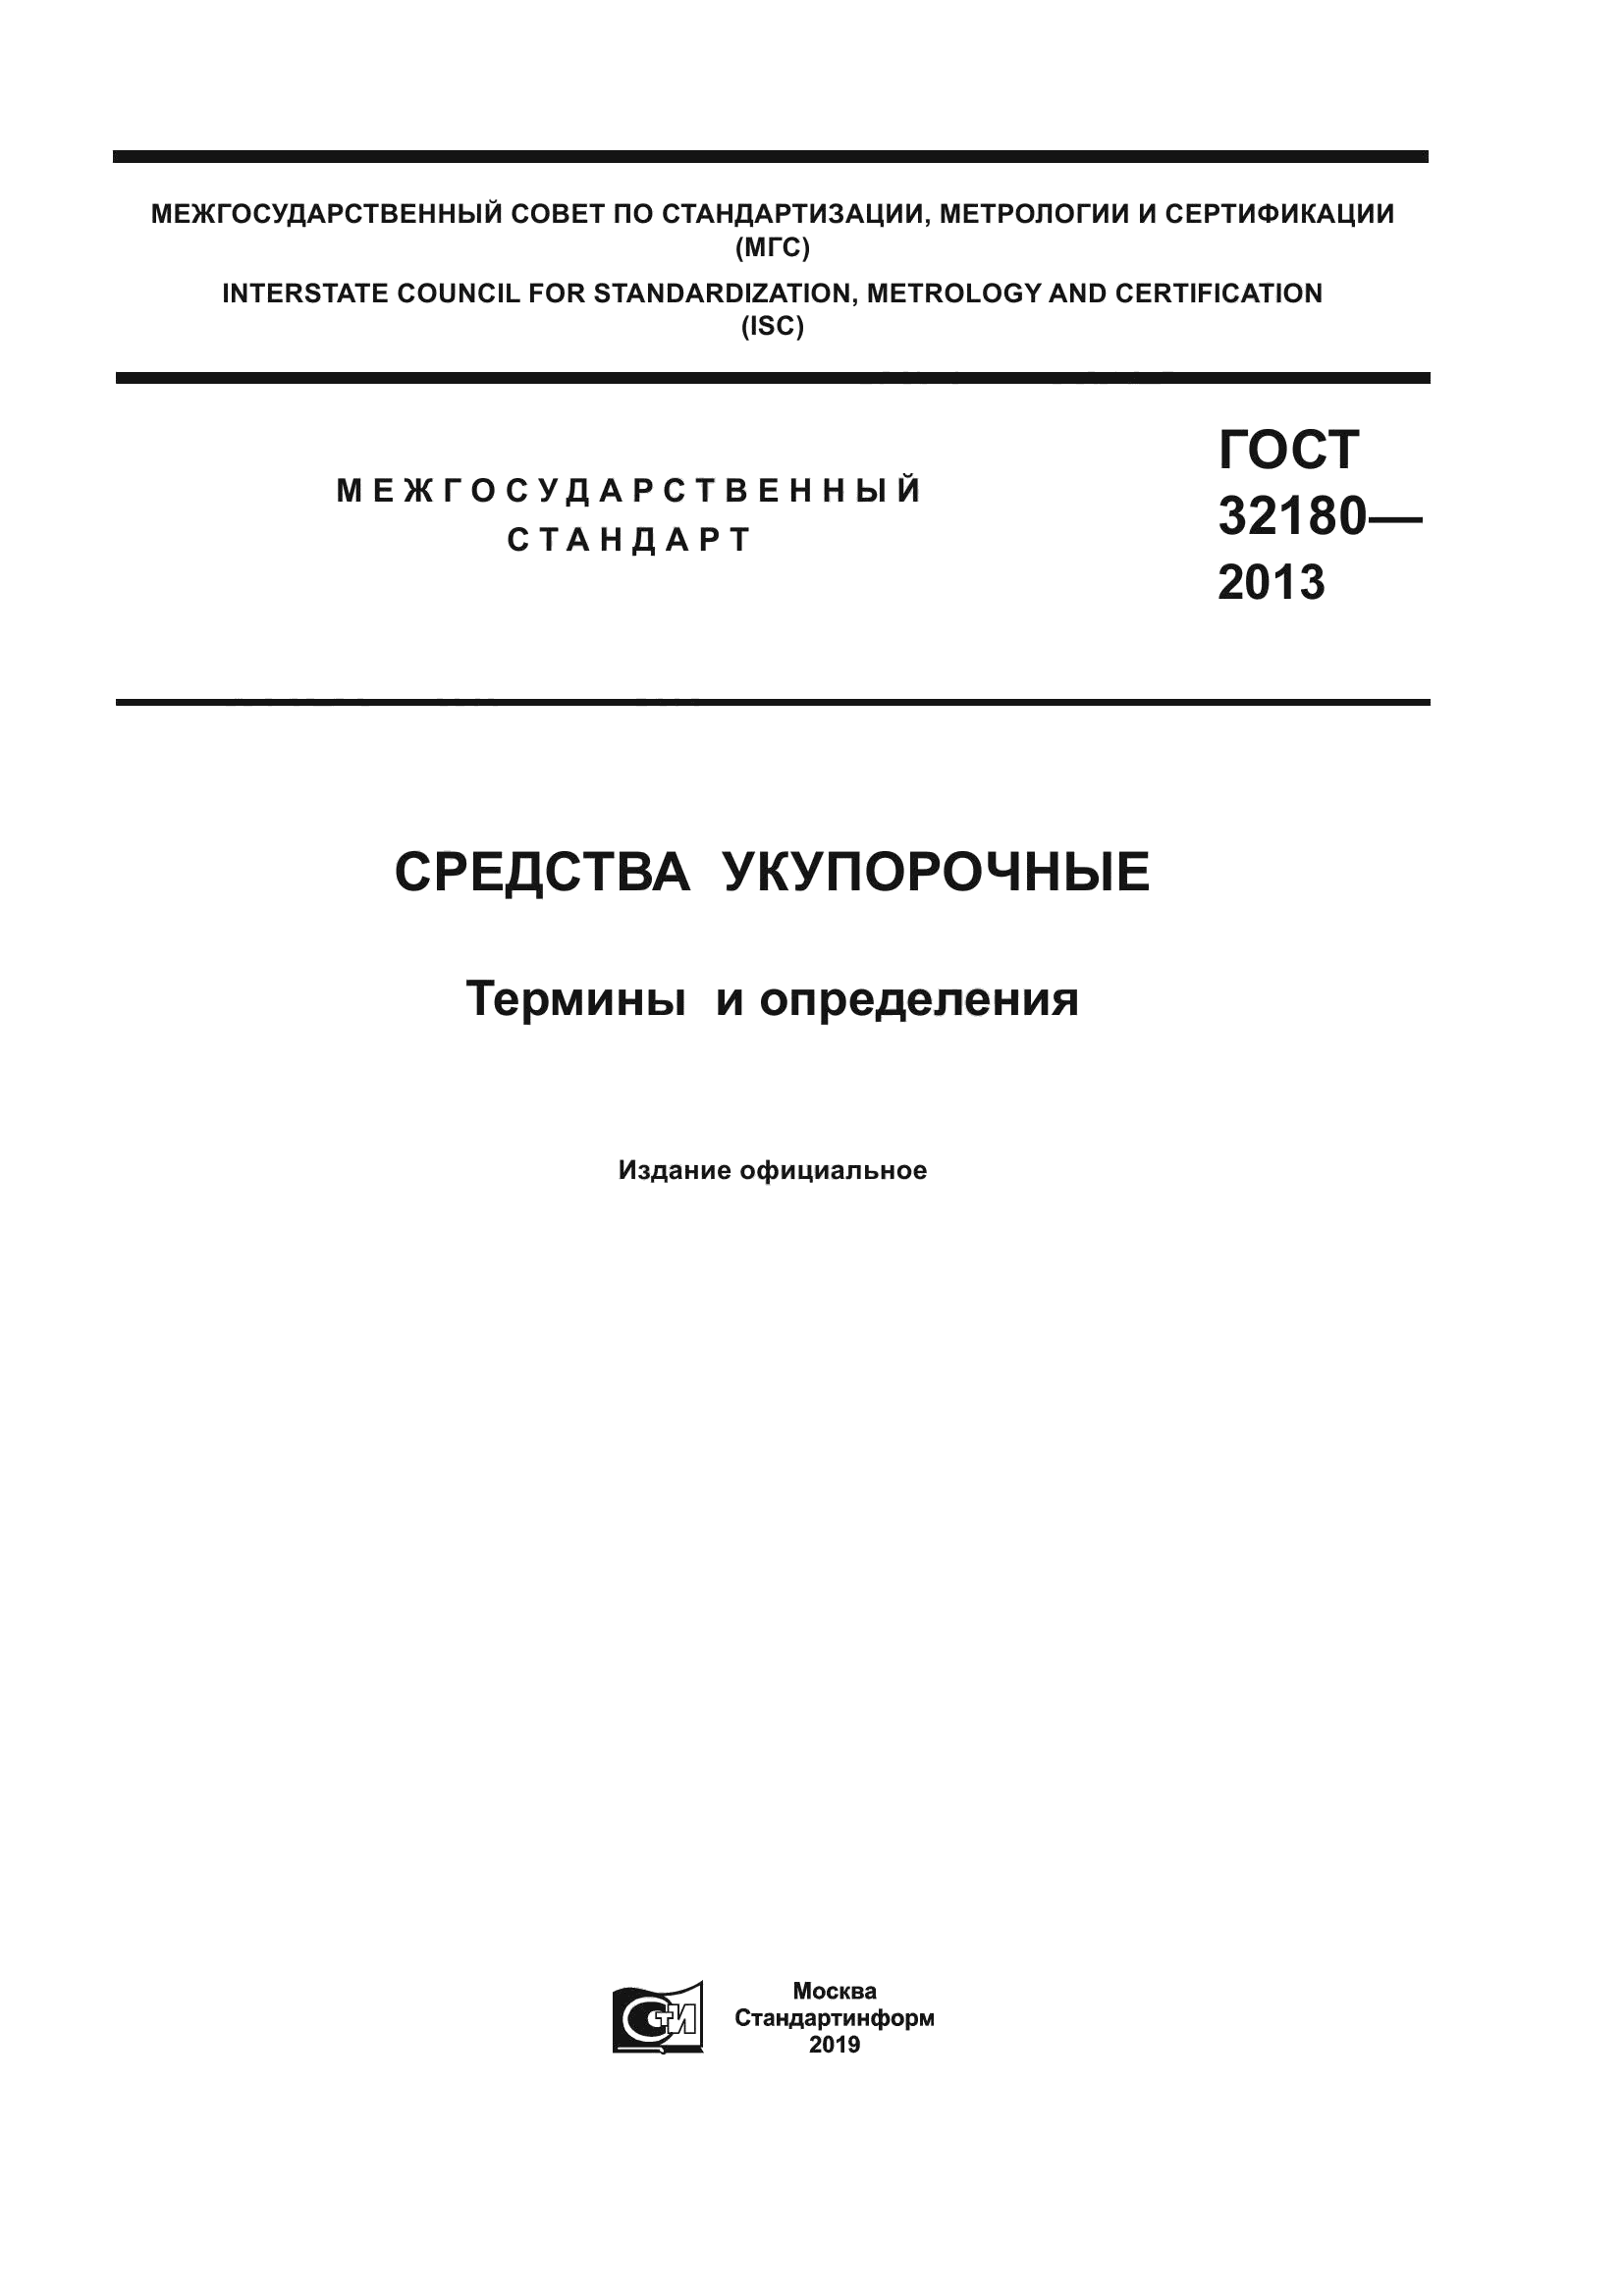 ГОСТ 32180-2013